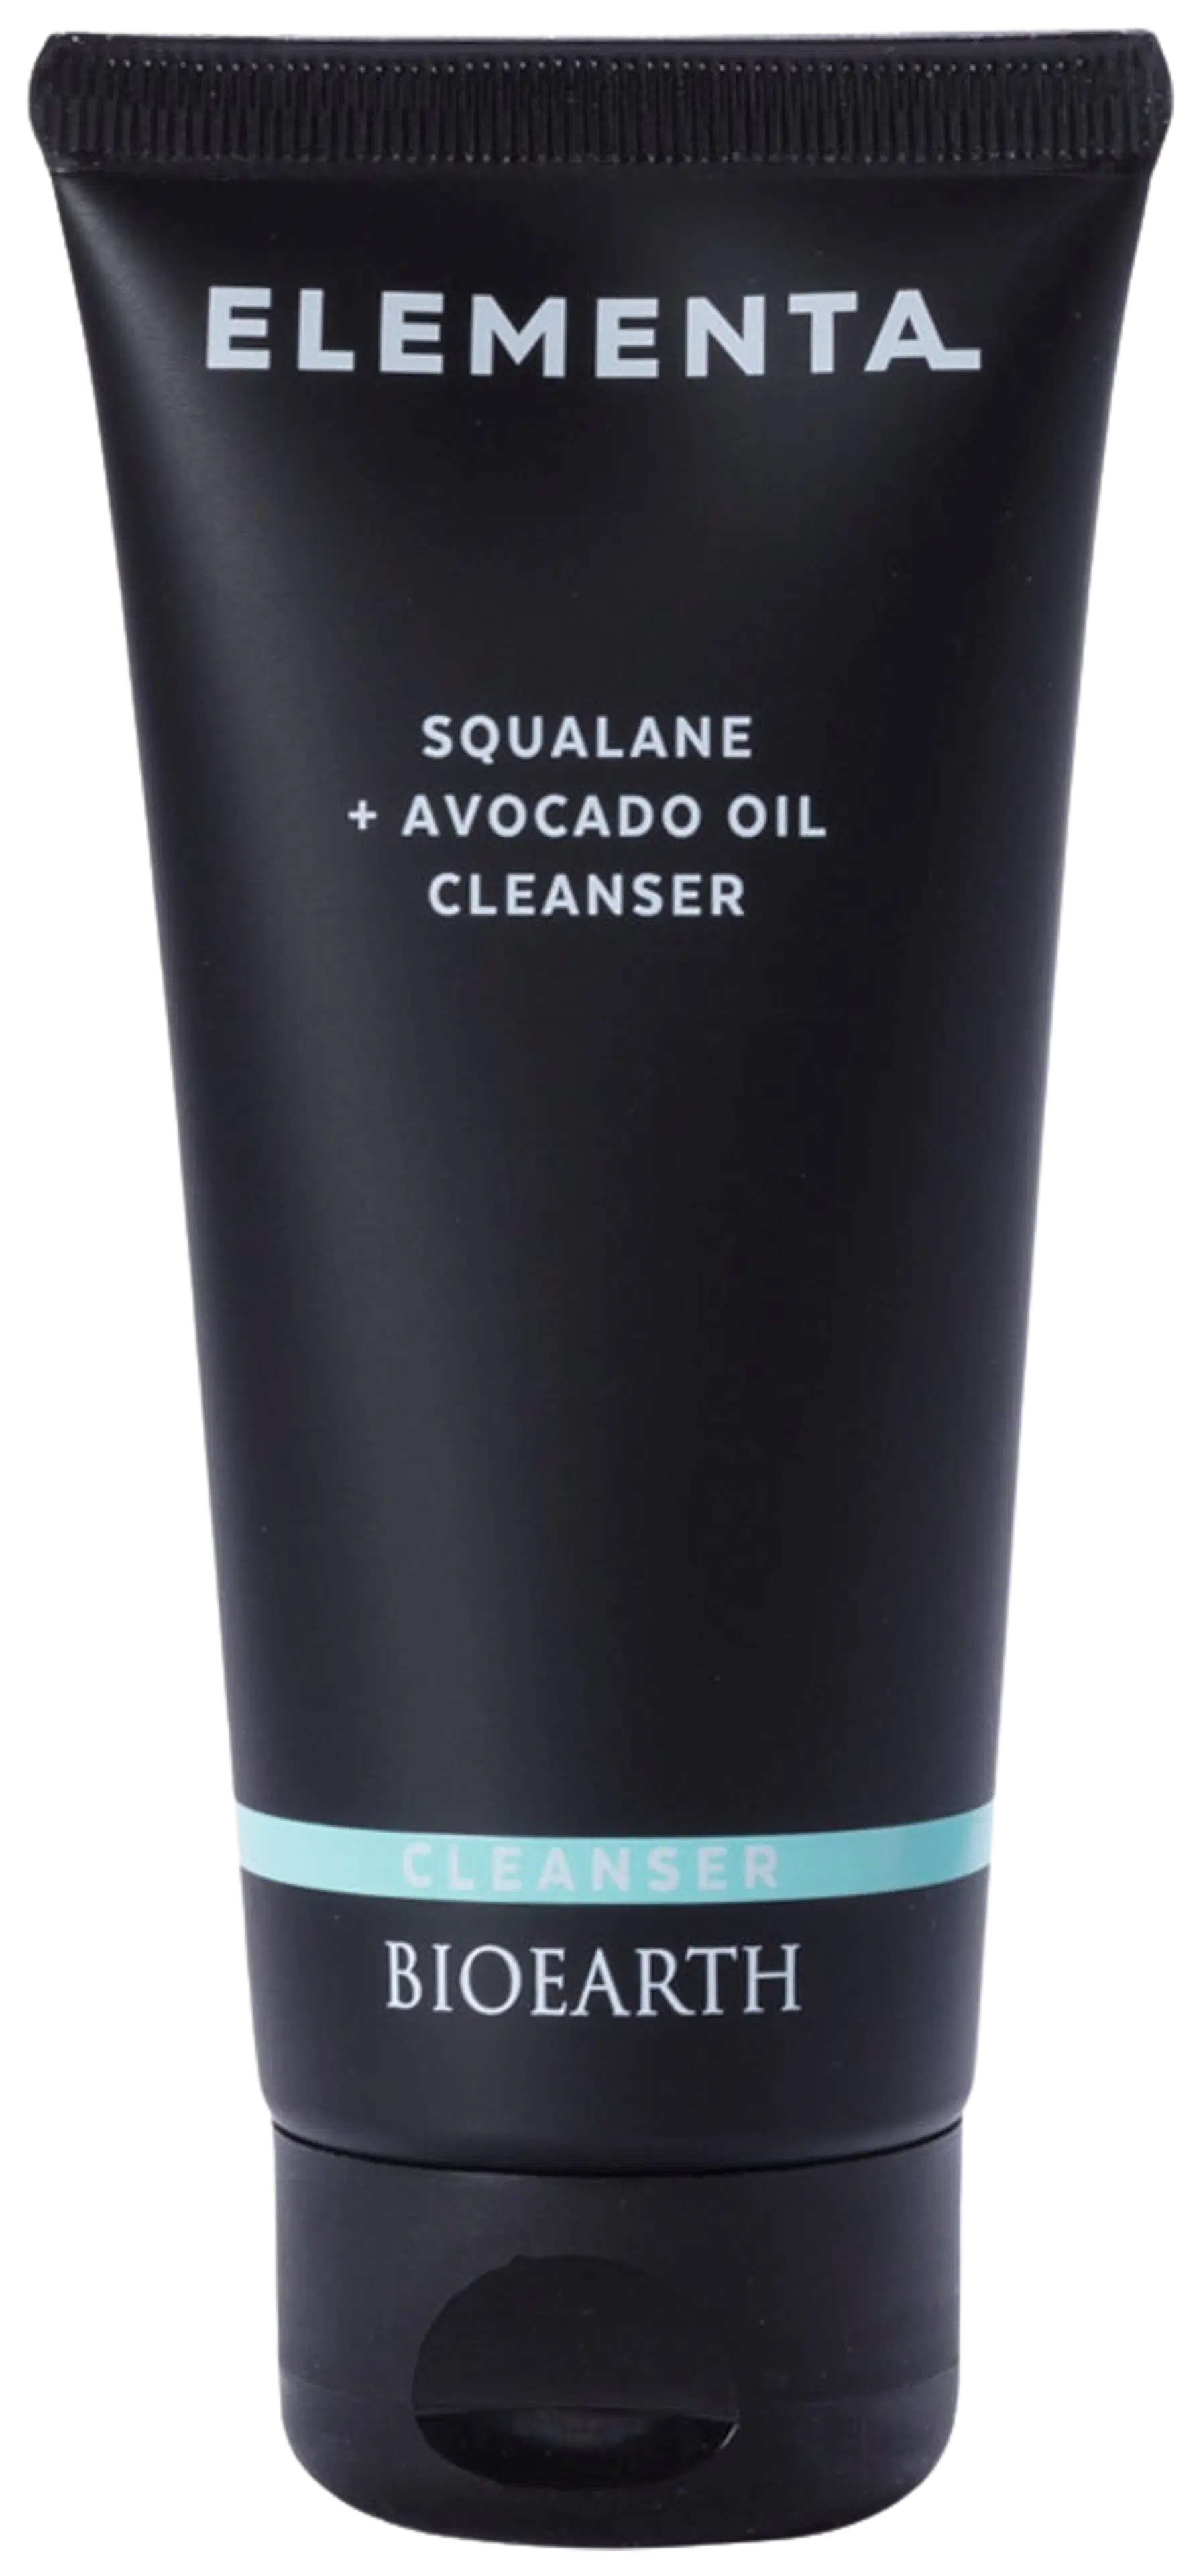 Bioearth Elementa Squalane + Avocado Oil Cleanser kasvojen puhdistusaine 100 ml